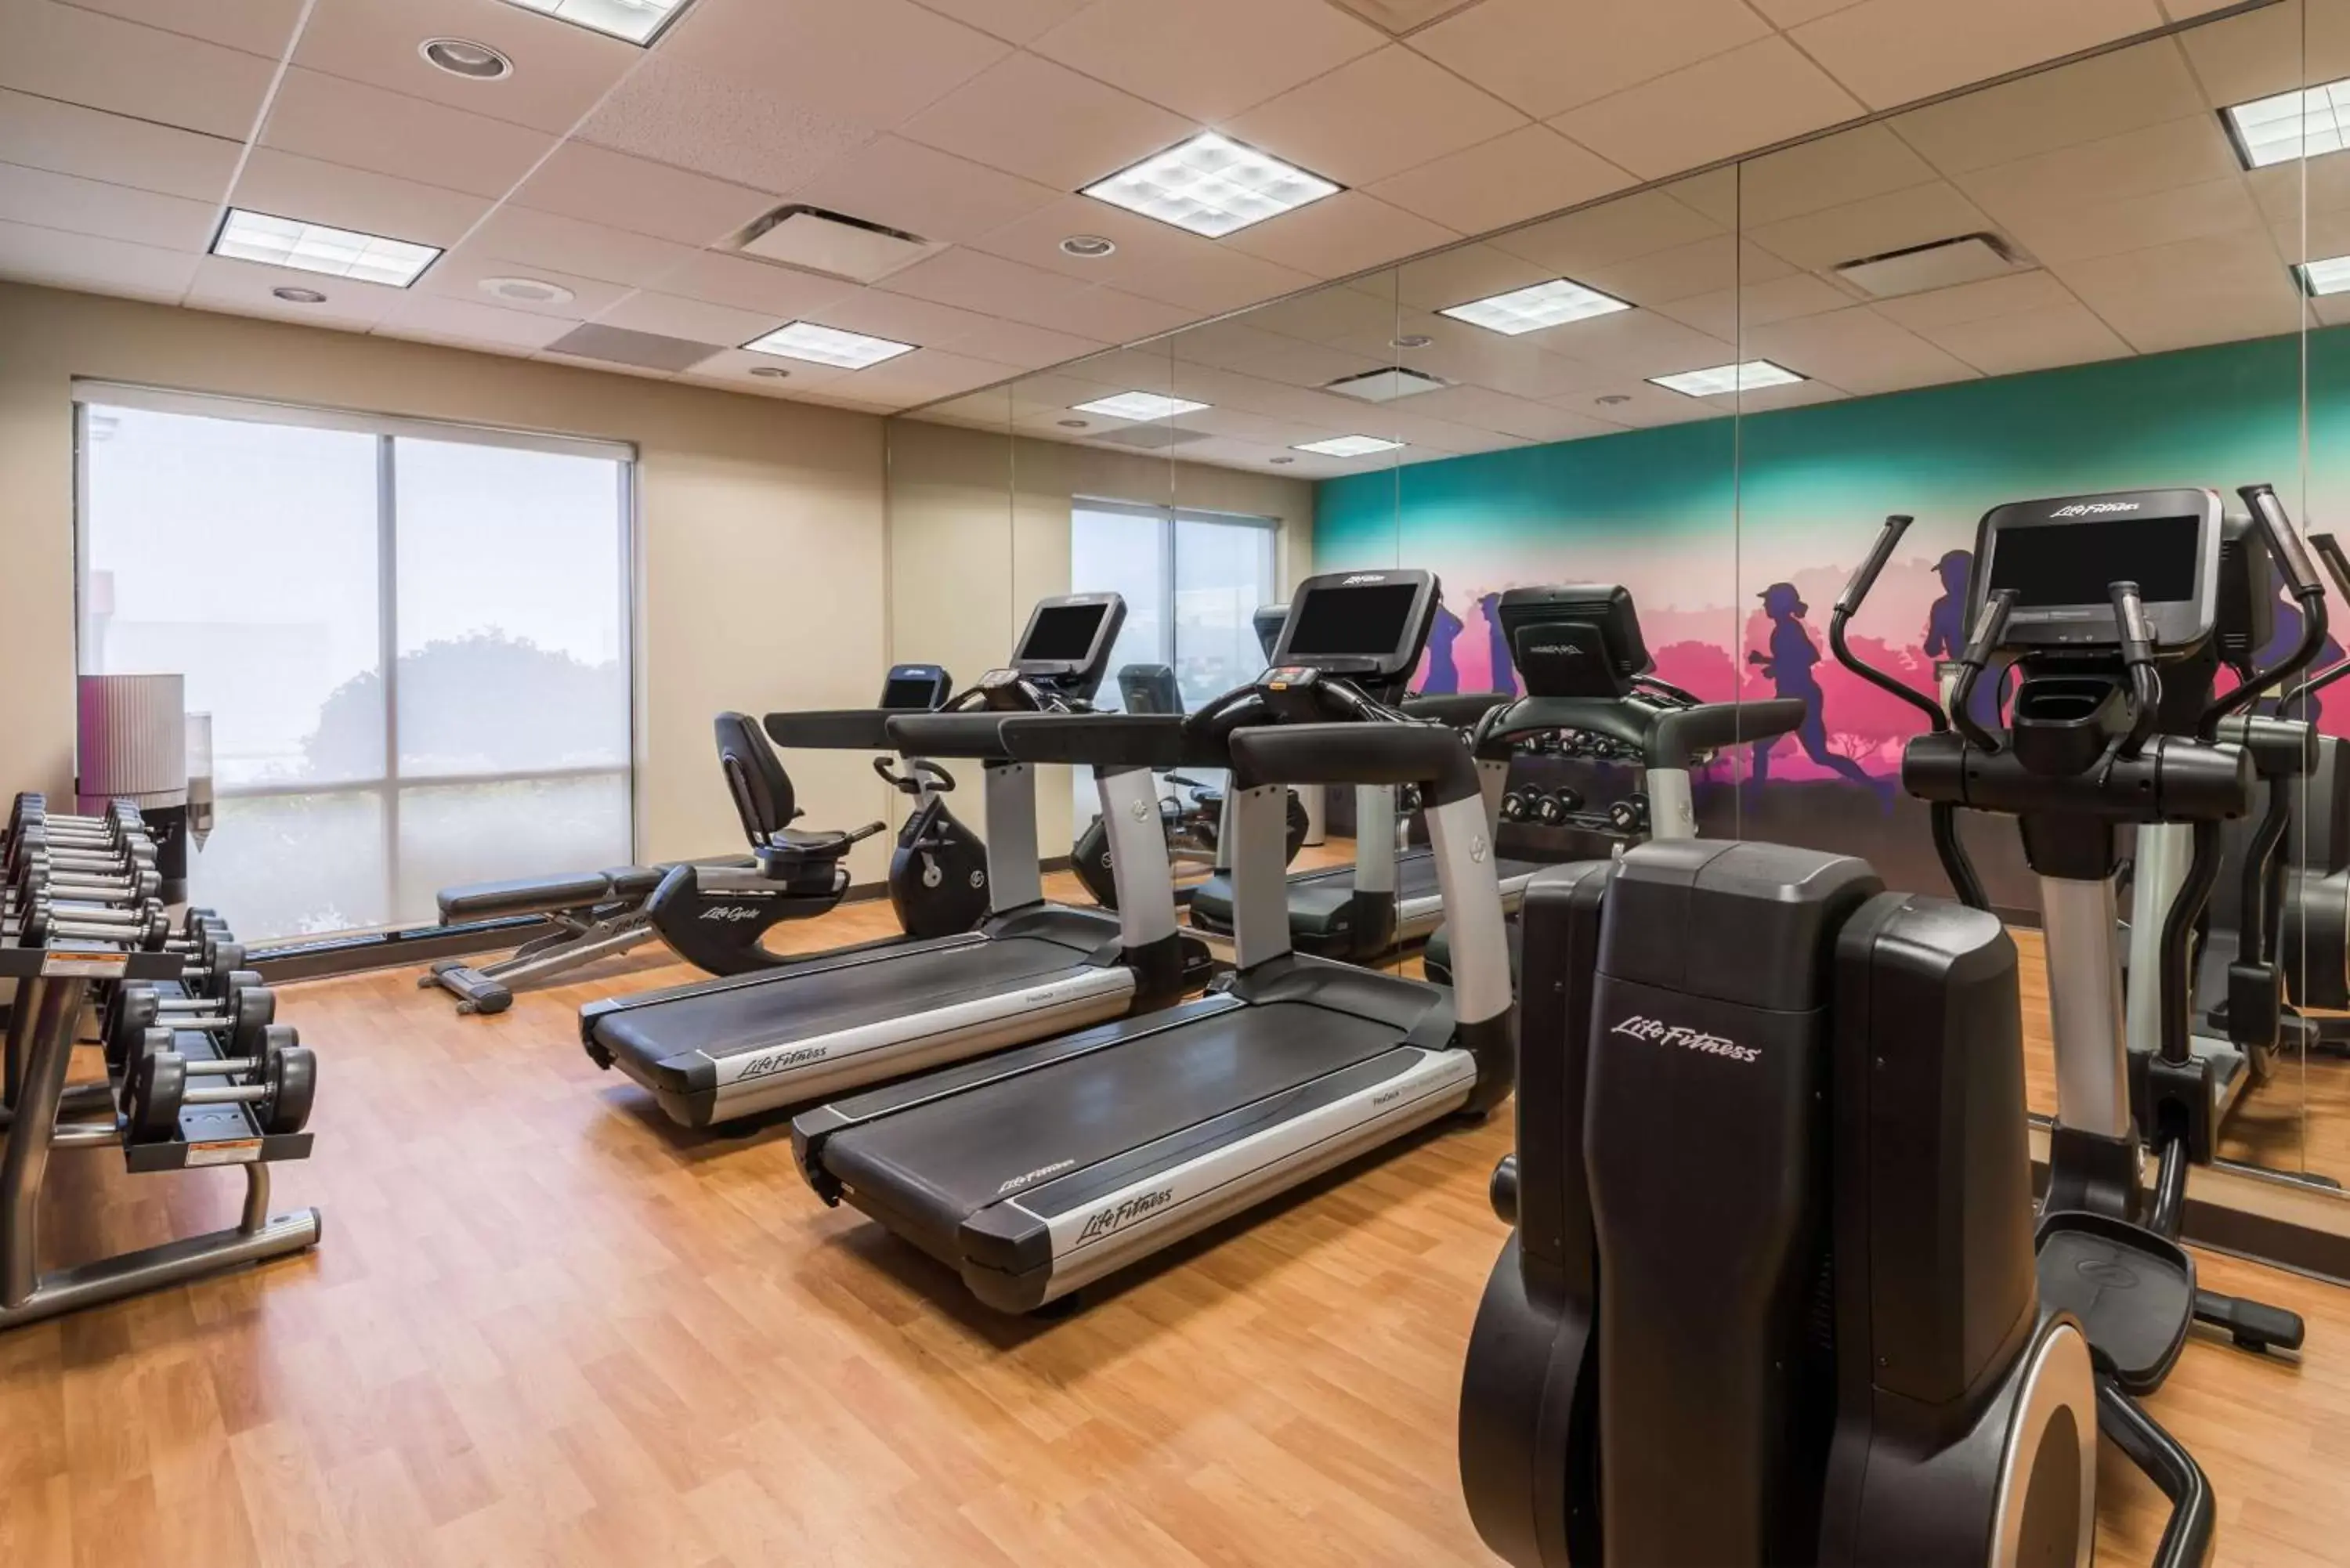 Fitness centre/facilities, Fitness Center/Facilities in Hyatt Place Rogers/Bentonville